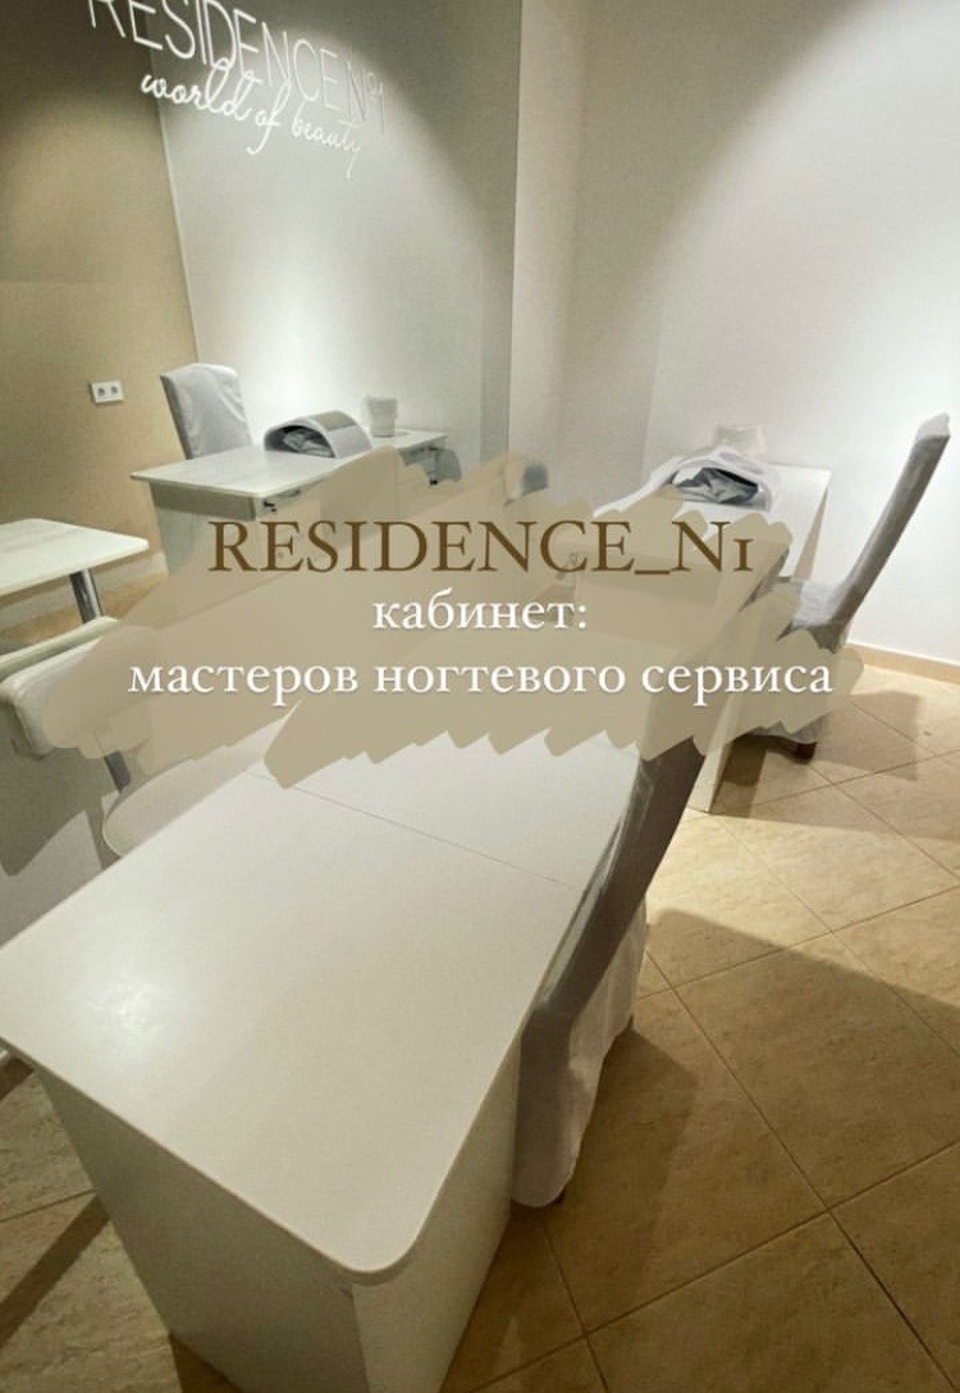 Центр красоты и здоровья Residence_n1 - Пятигорск